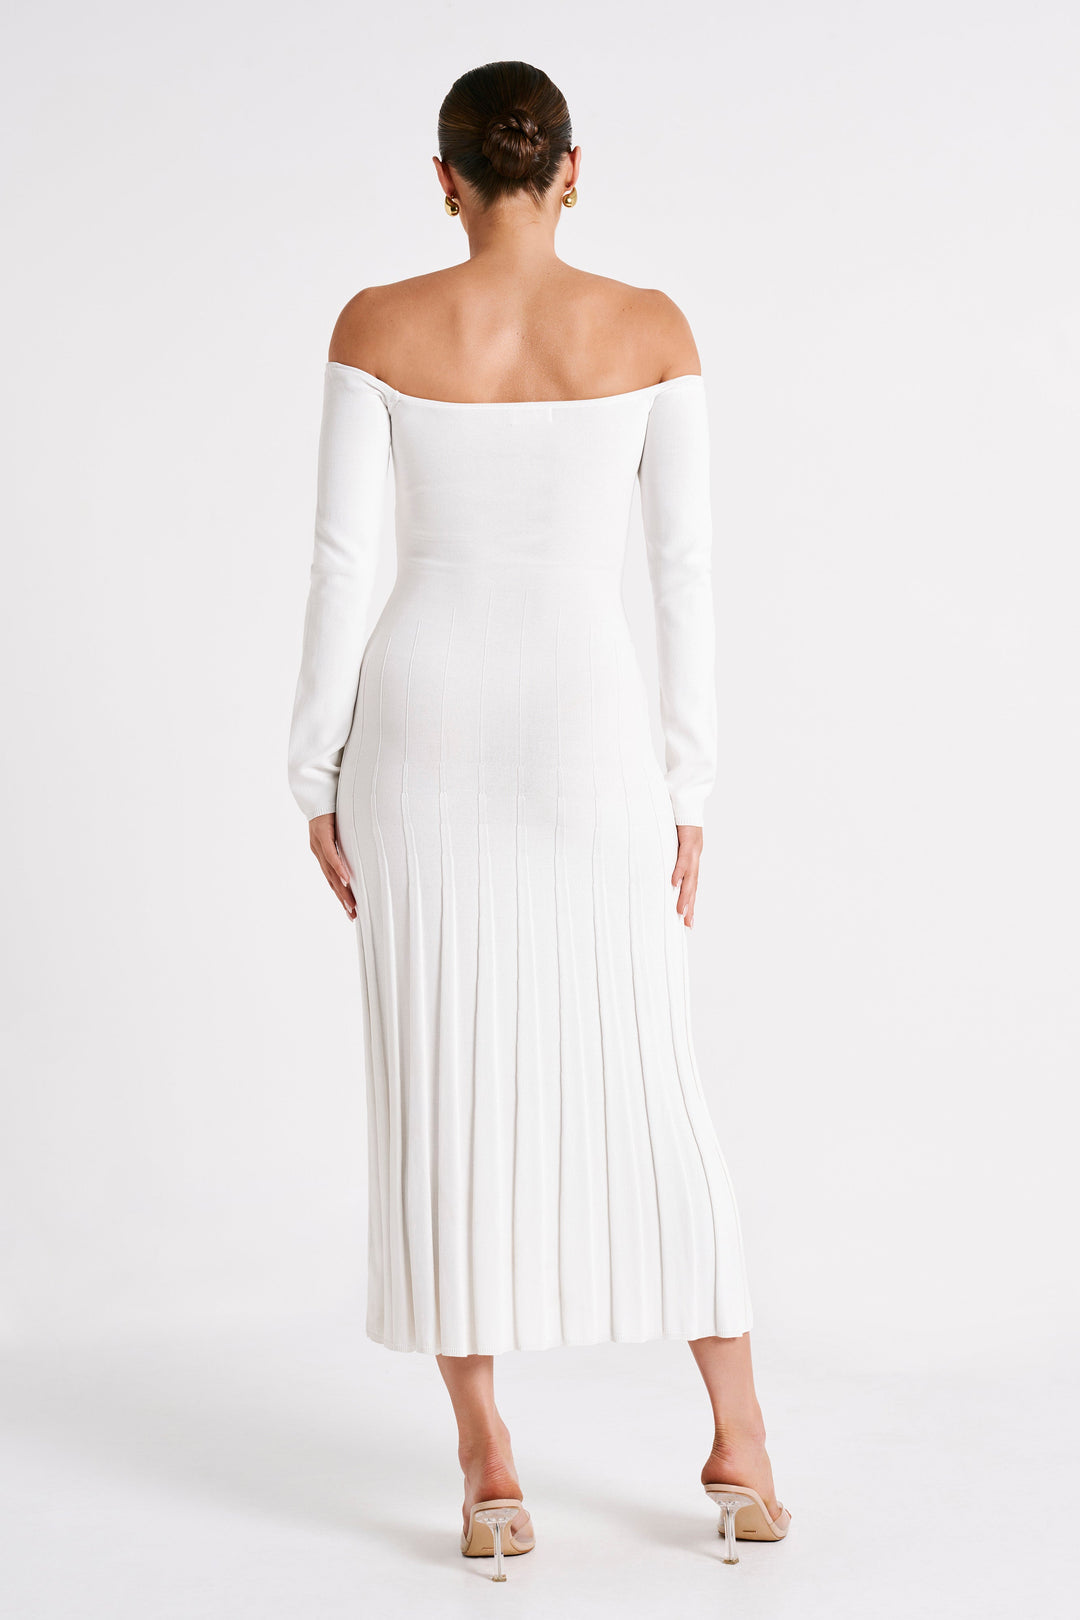 Emmeline Long Sleeve Rib Knit Midi Dress - White - MESHKI